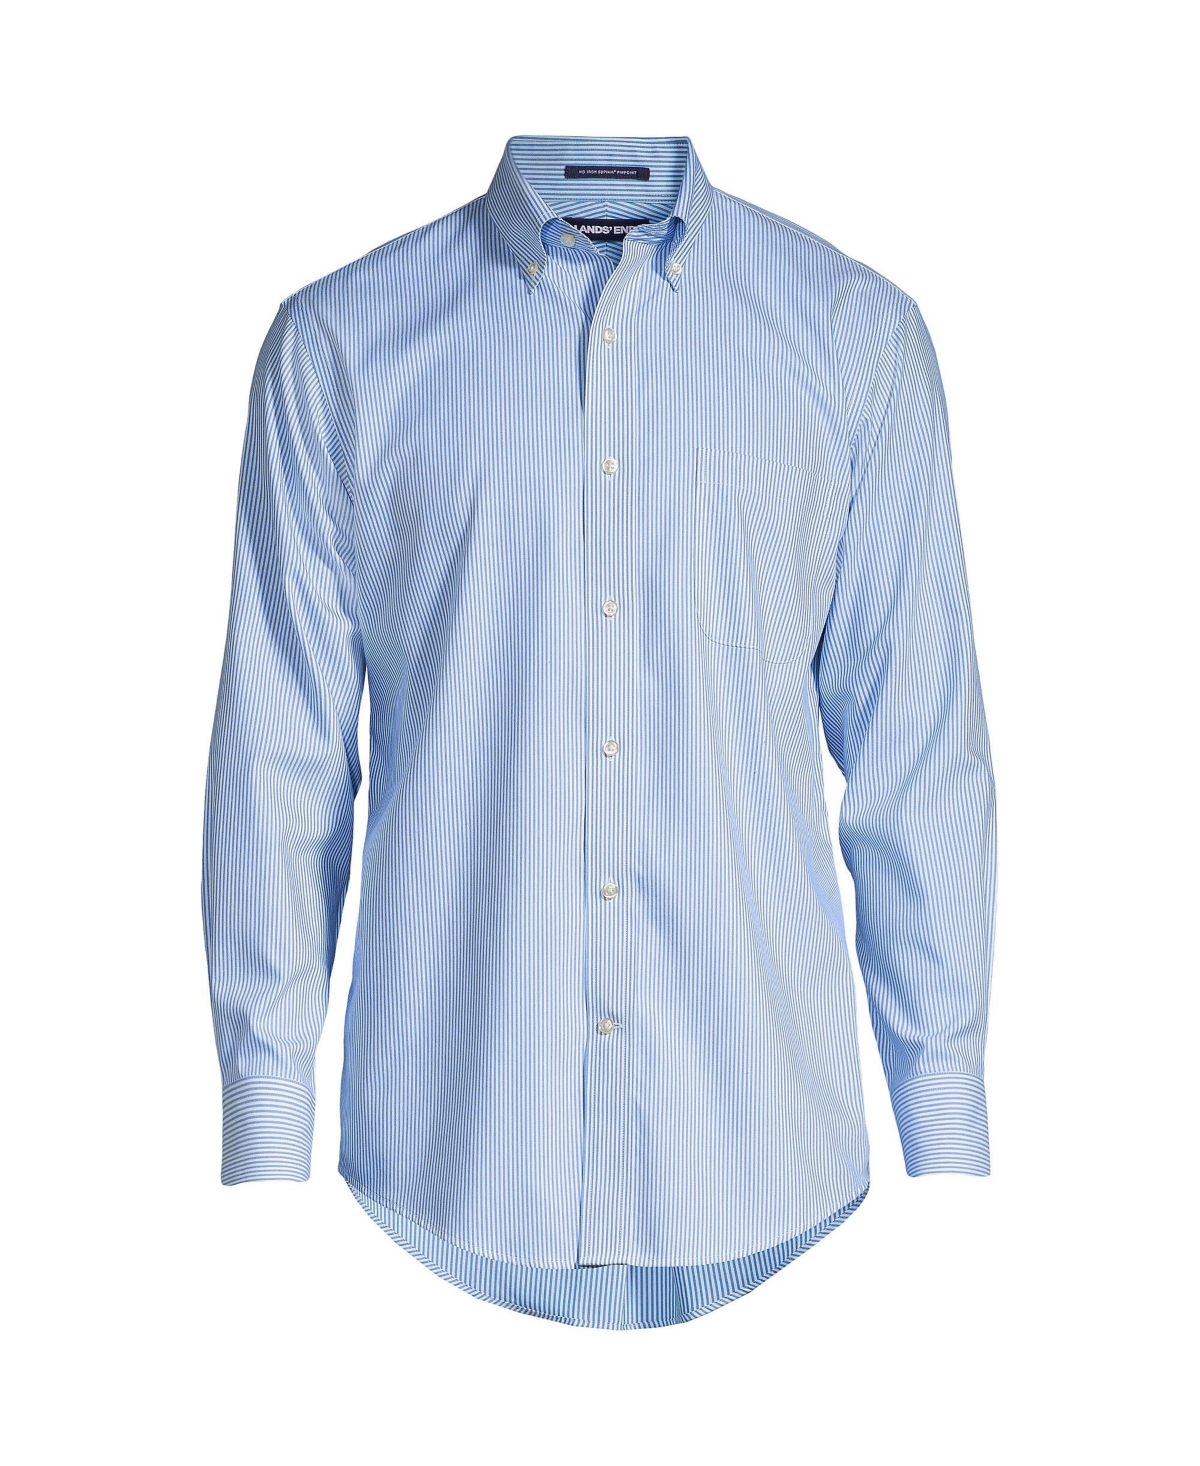 Big & Tall Traditional Fit Pattern No Iron Supima Pinpoint Buttondown Collar Dress Shirt - Ultimate gray check